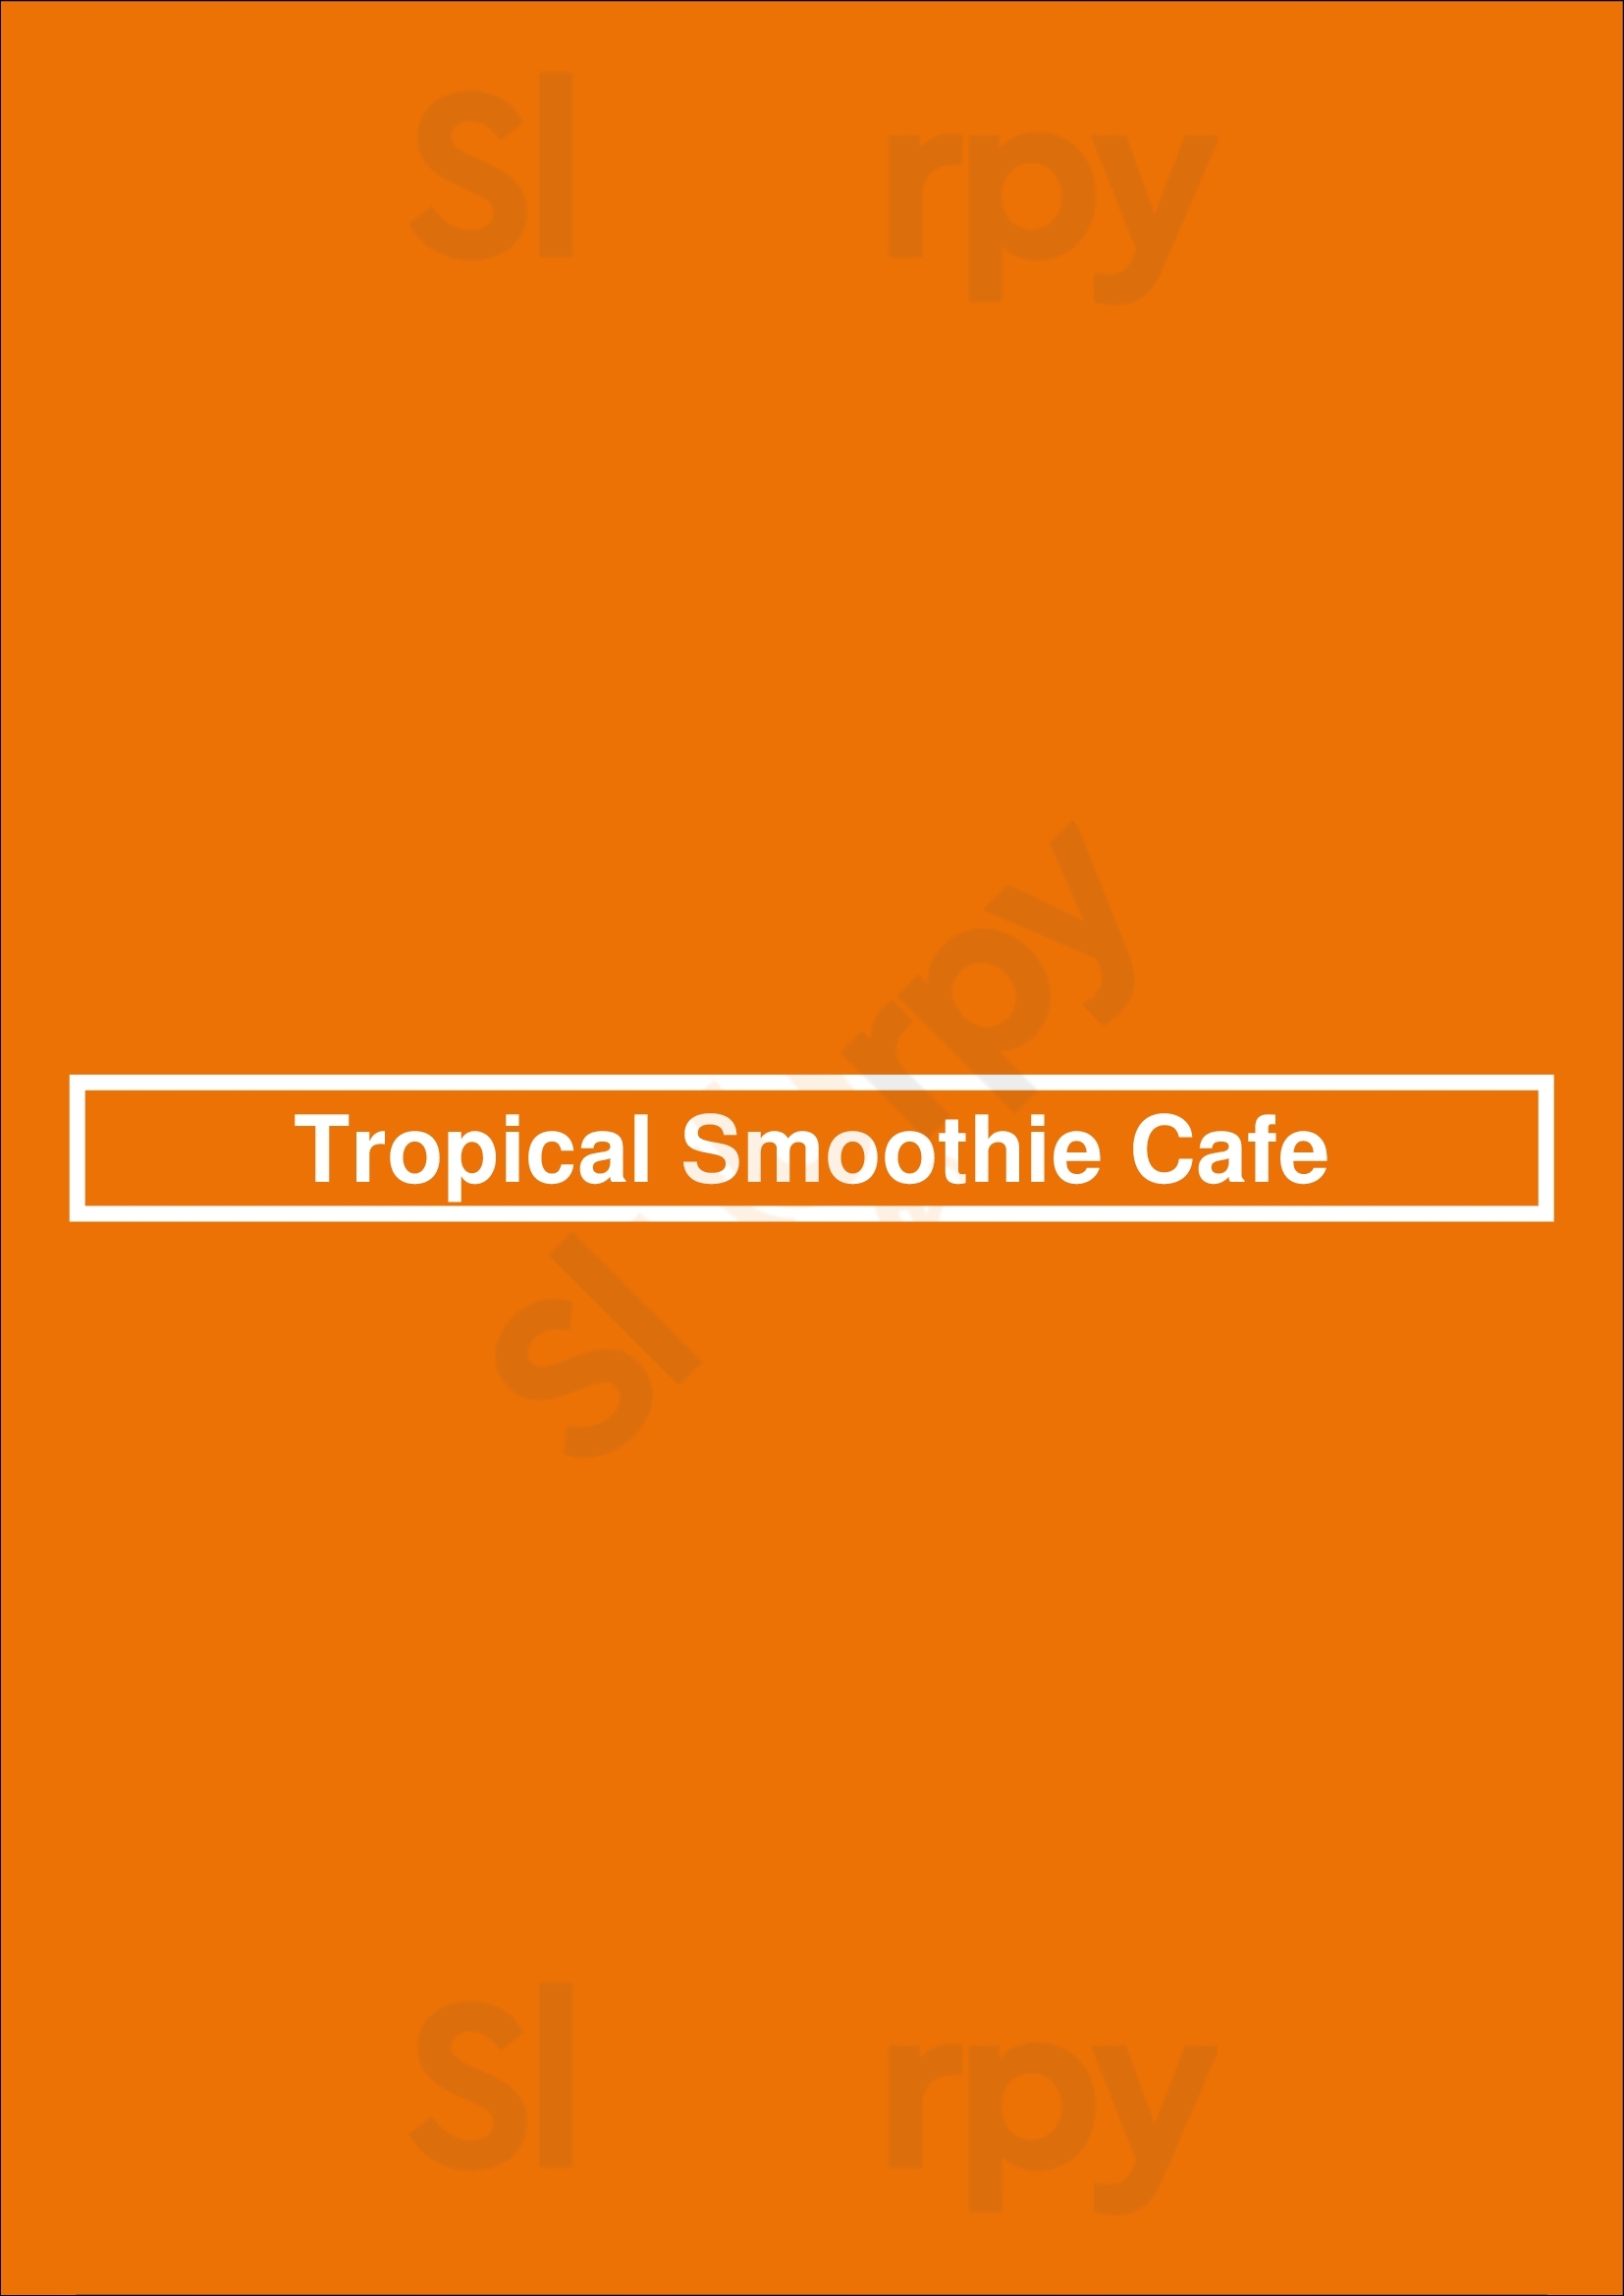 Tropical Smoothie Cafe East Northport Menu - 1